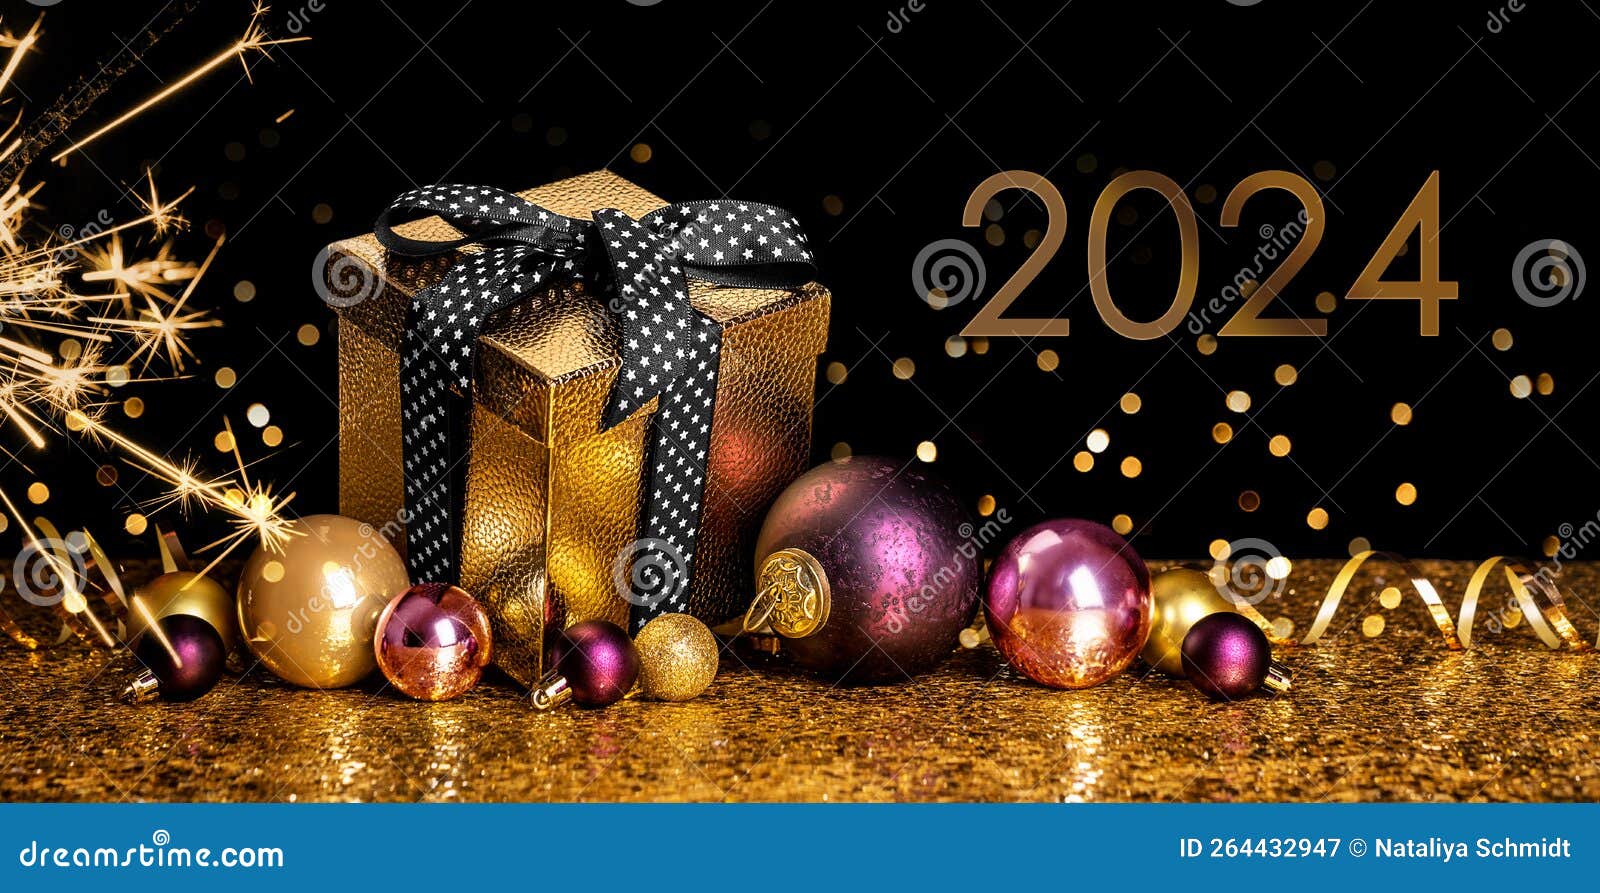 happy new year 2024! golden gift box